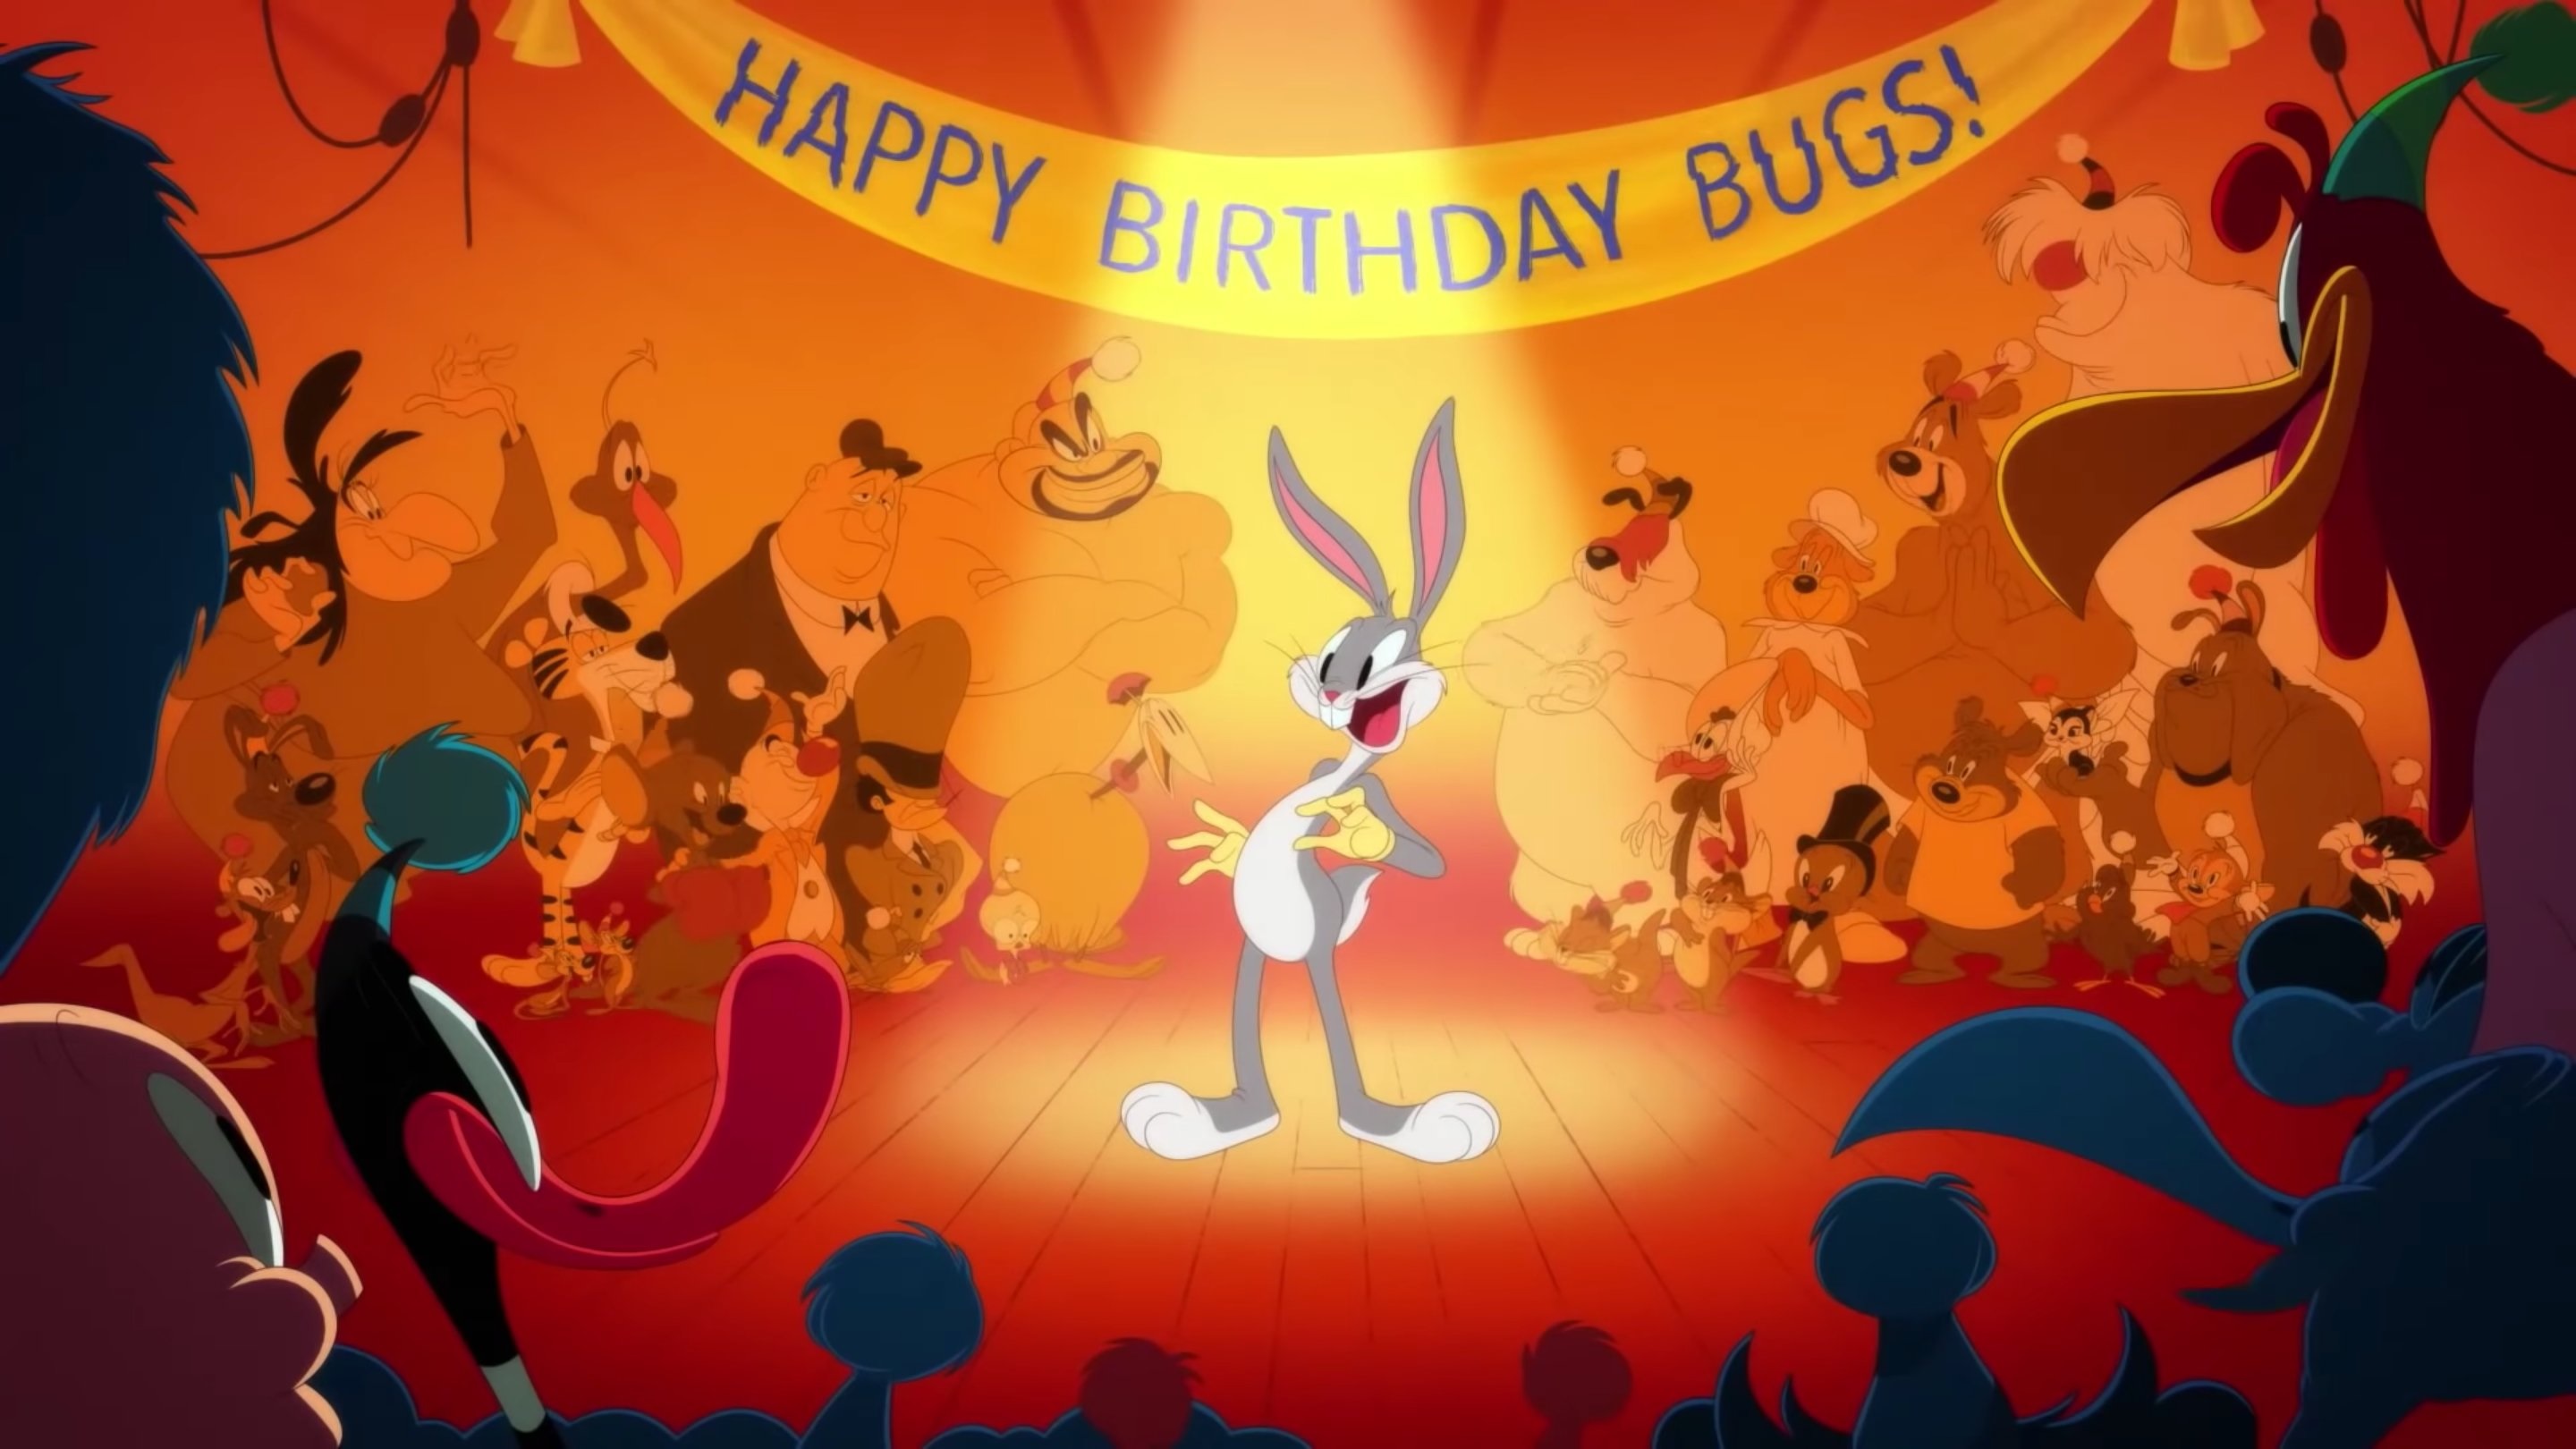 Happy Birthday Bugs Bunny!